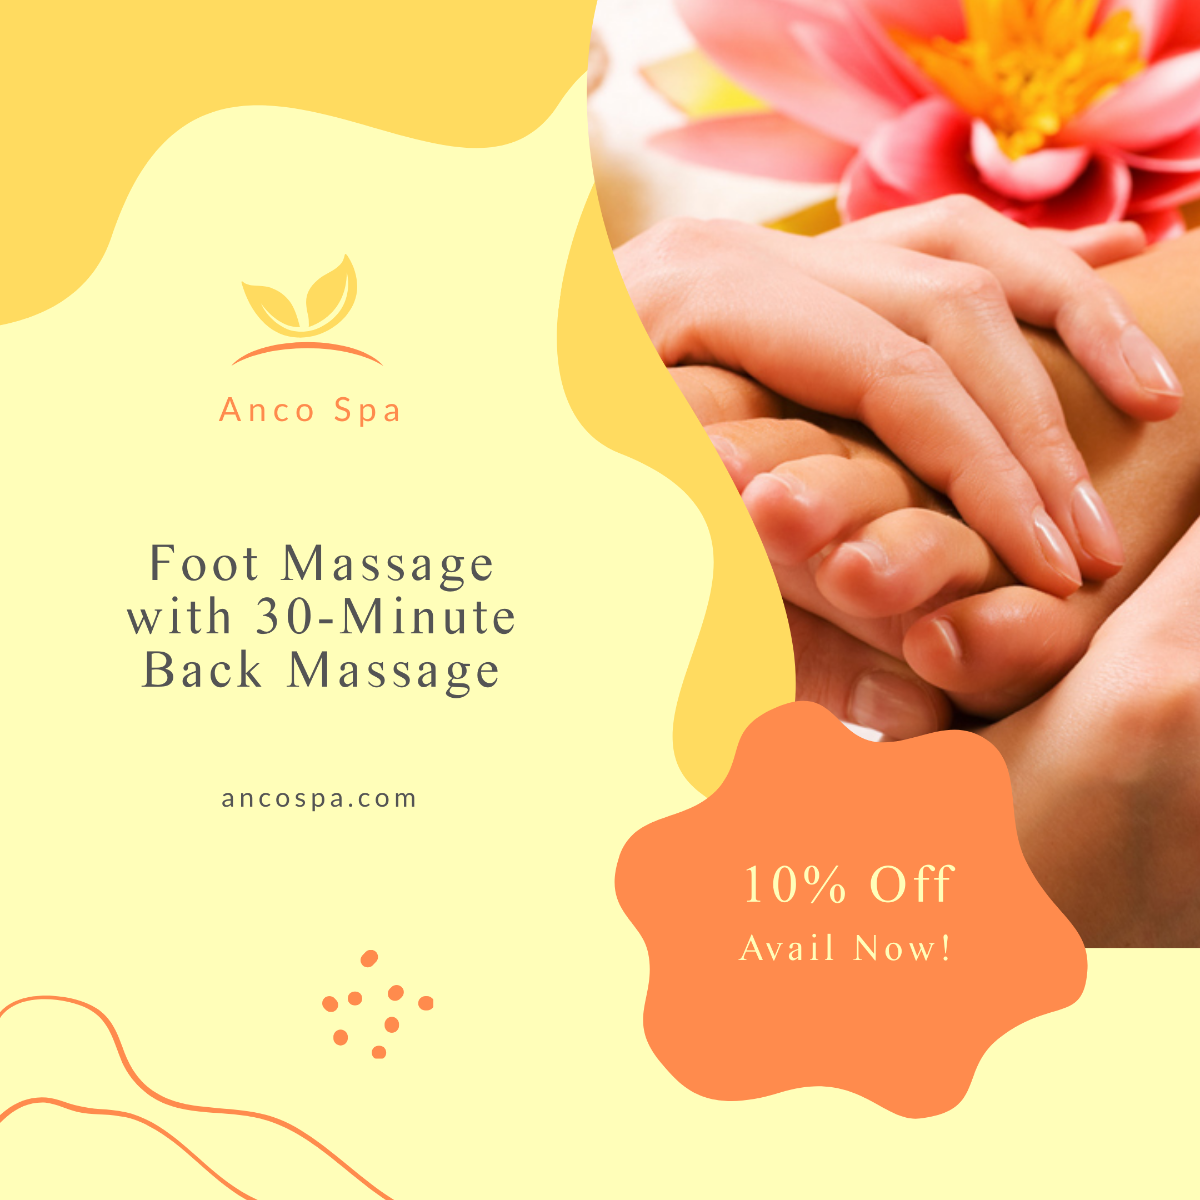 Foot Massage Offer Post, Instagram, Facebook Template